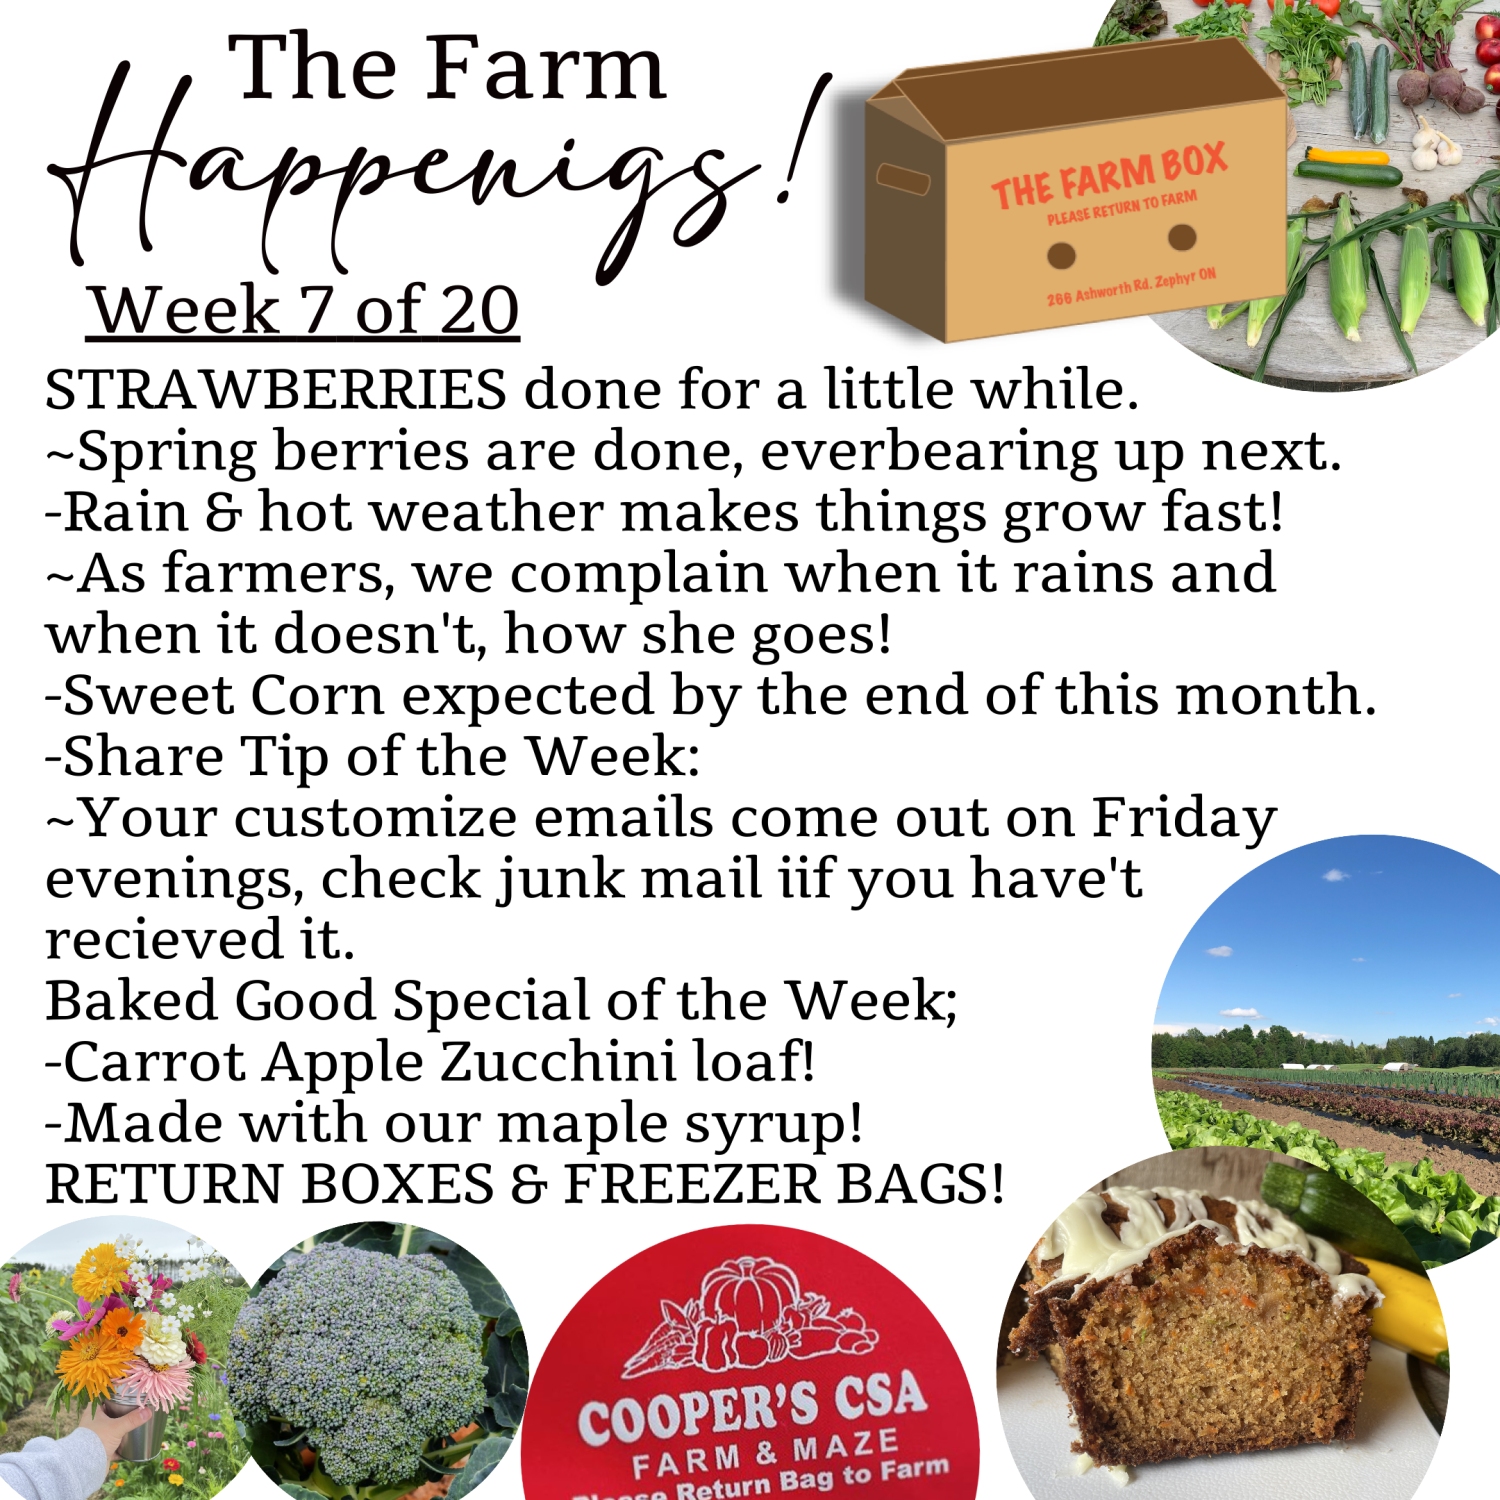 Previous Happening: "The Farm Box"-Coopers CSA Farm Farm Happenings Week 7